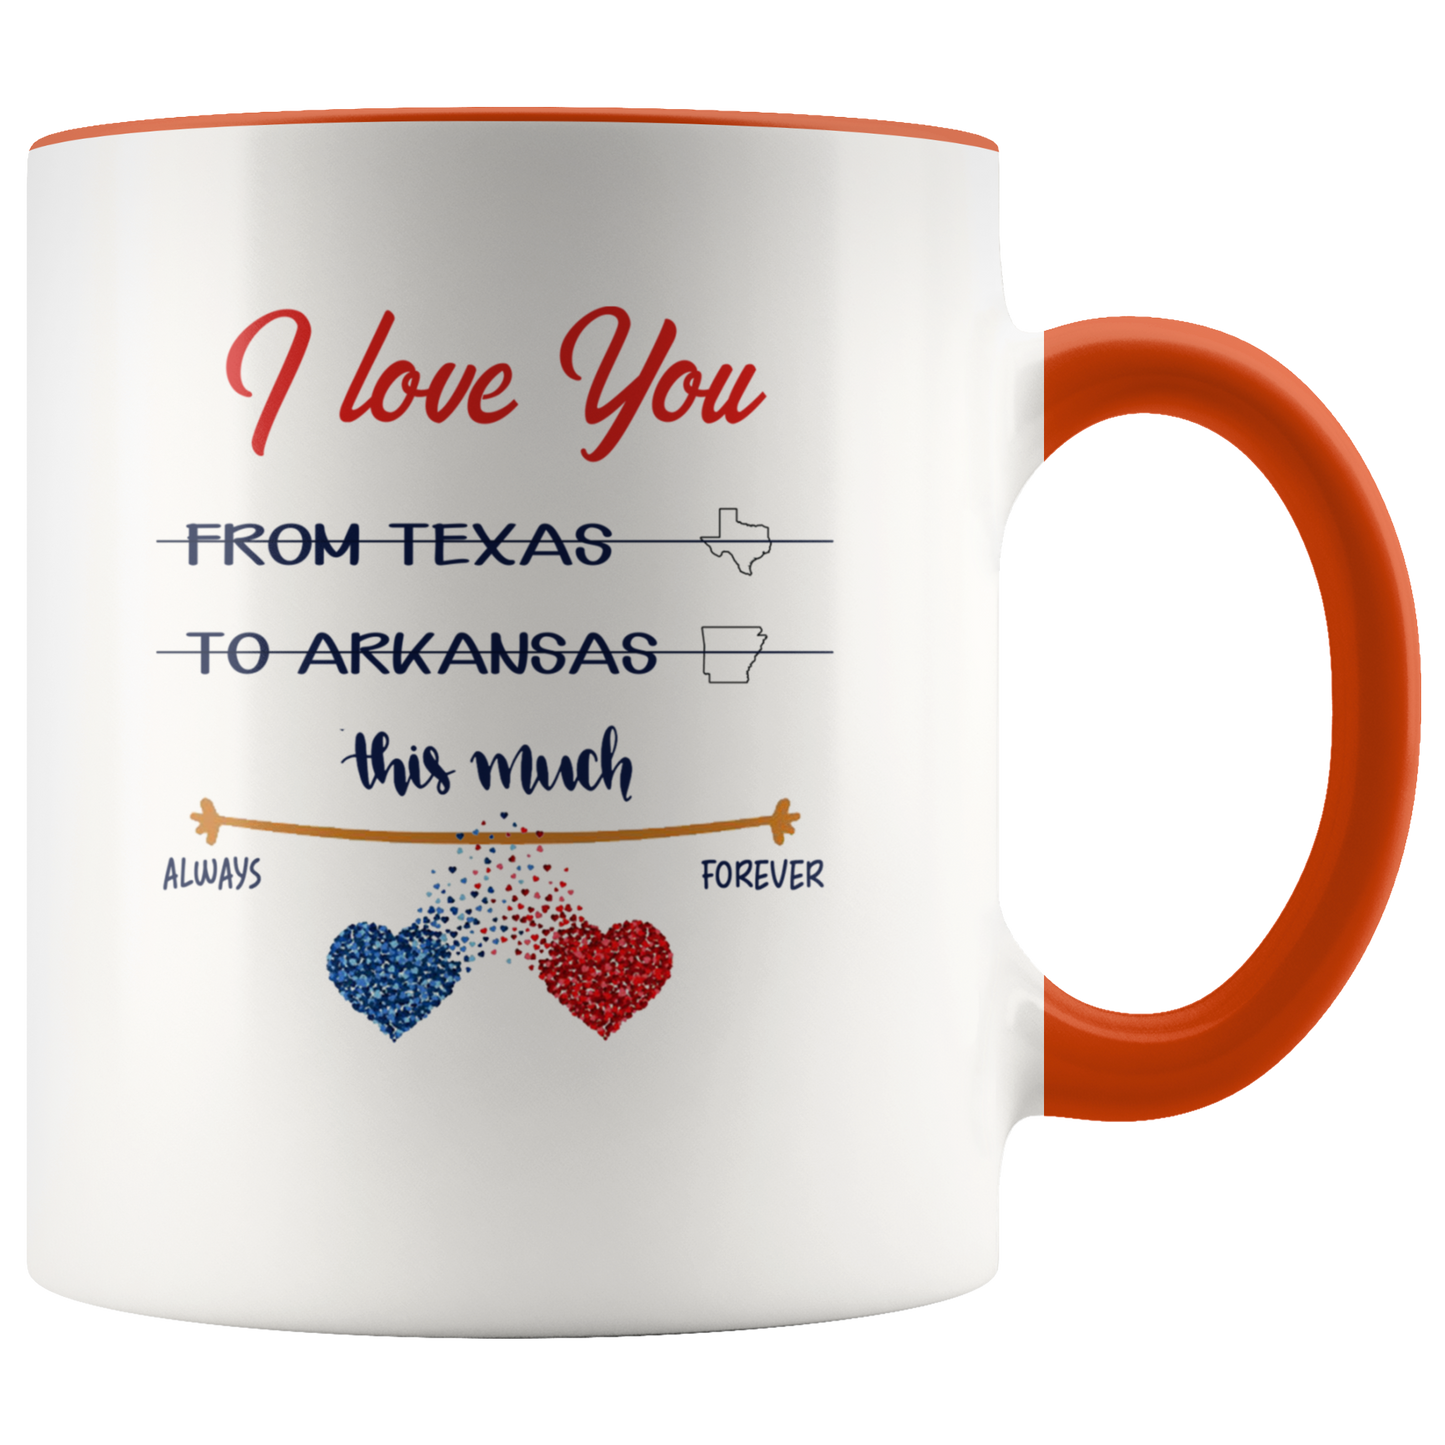 M-21394347-sp-23683 - [ Texas | Arkansas ]Long Distance Valentines Gifts Mug From Texas To Arkansas -